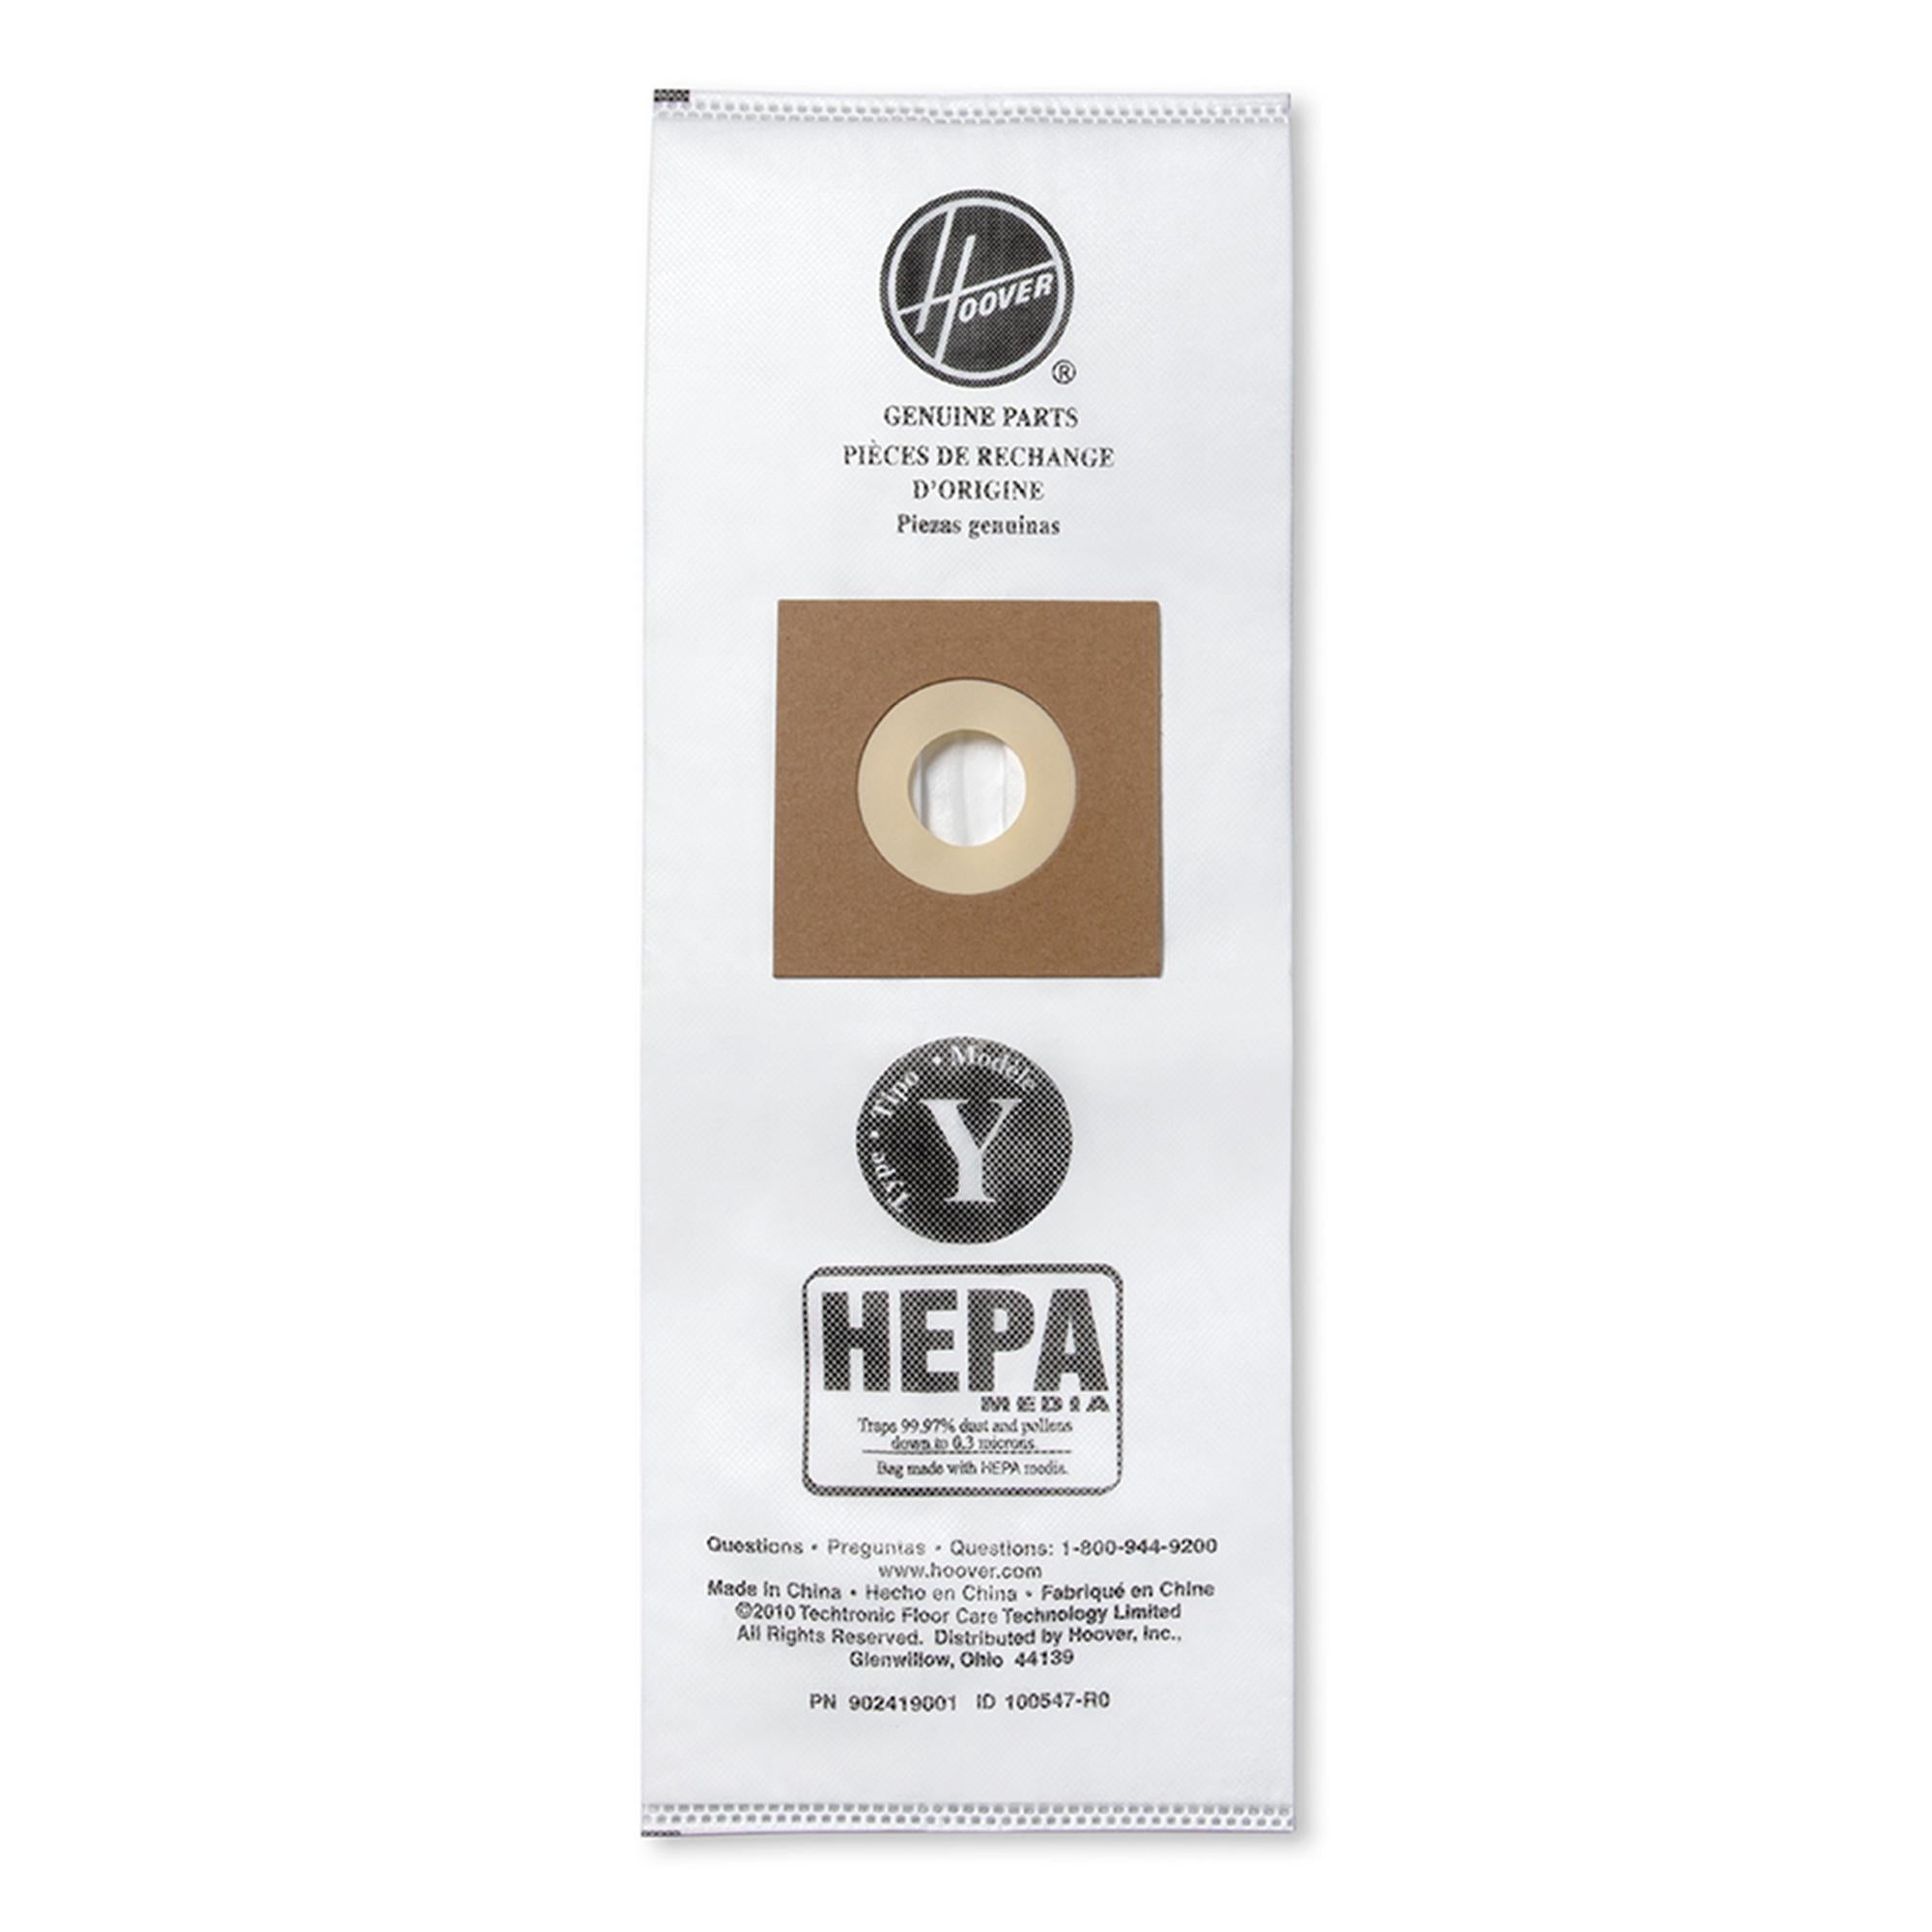 Hoover Telios Extra H81 Pure EPA Bag Pack (4)